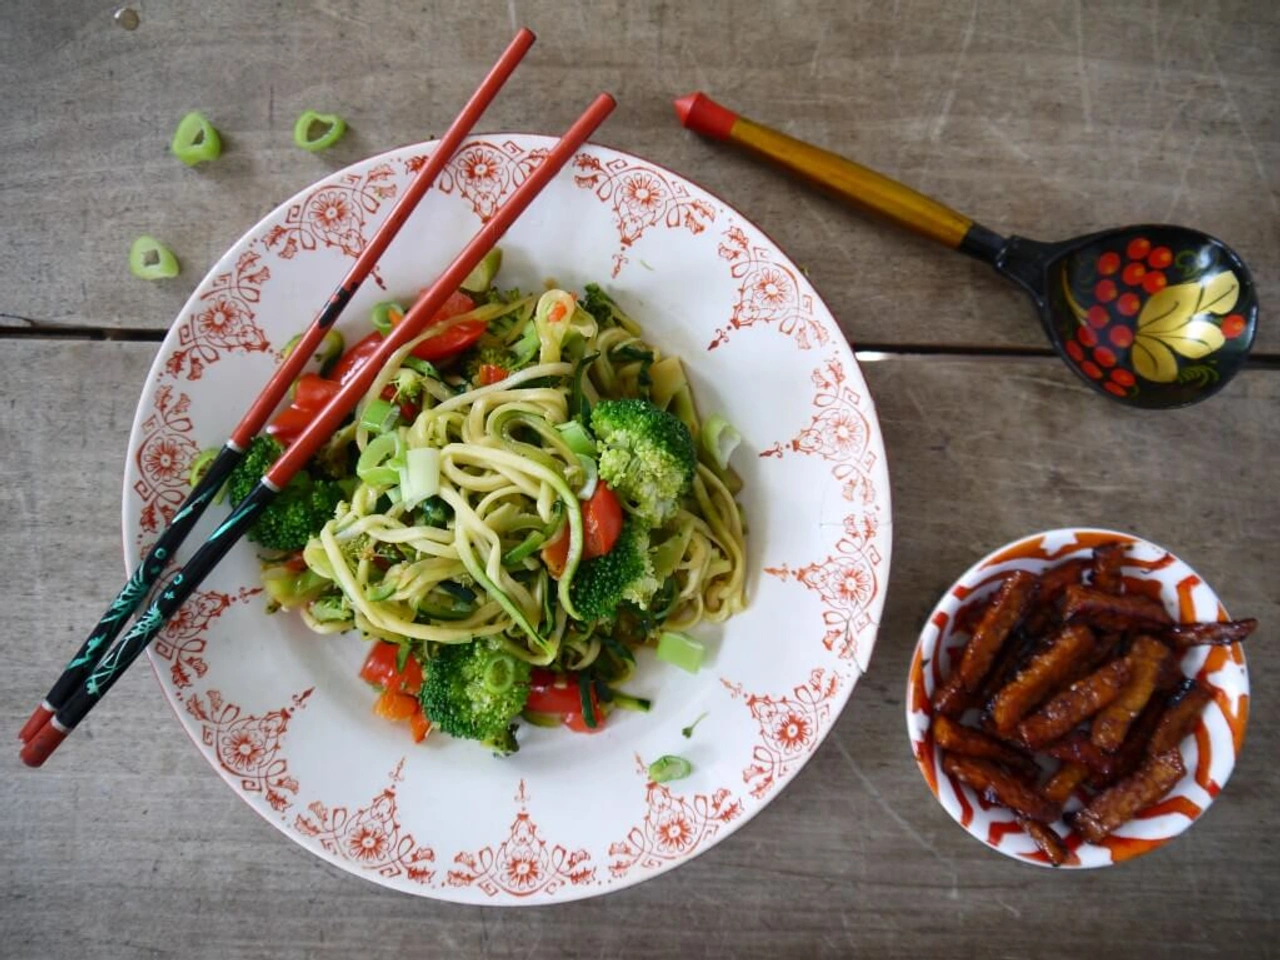 Sticky tempeh met broccoli, paprika en courgettenoedels